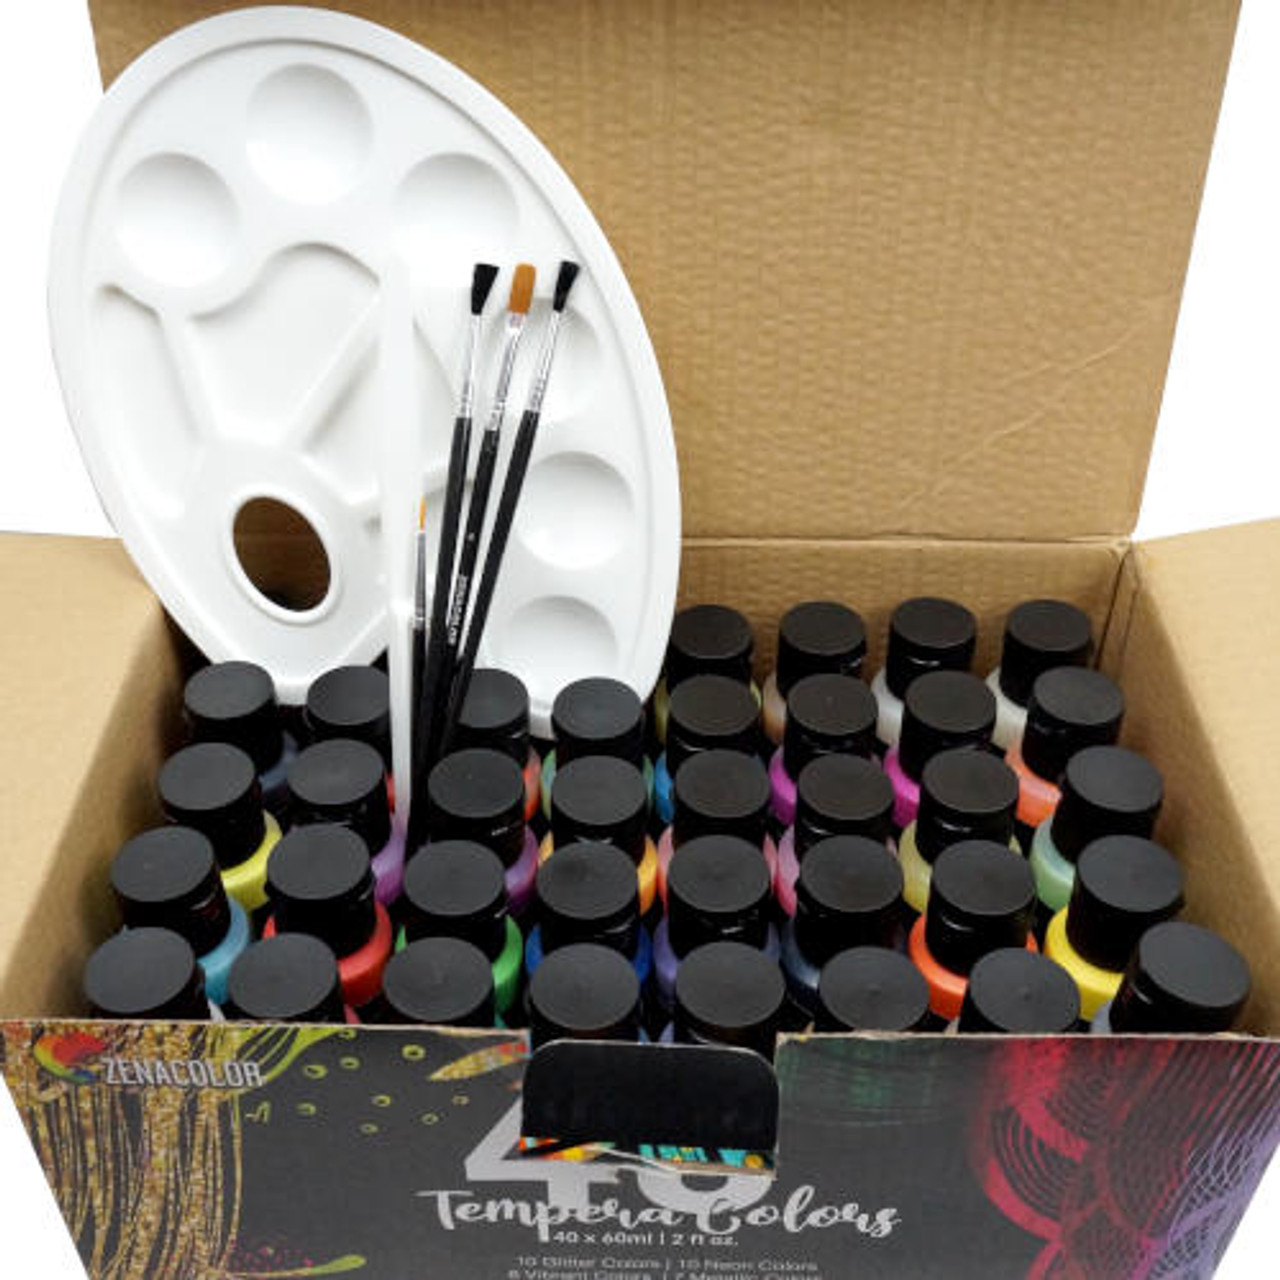 Color Splash!® Easy Pack Liquid Tempera Paint Art Set